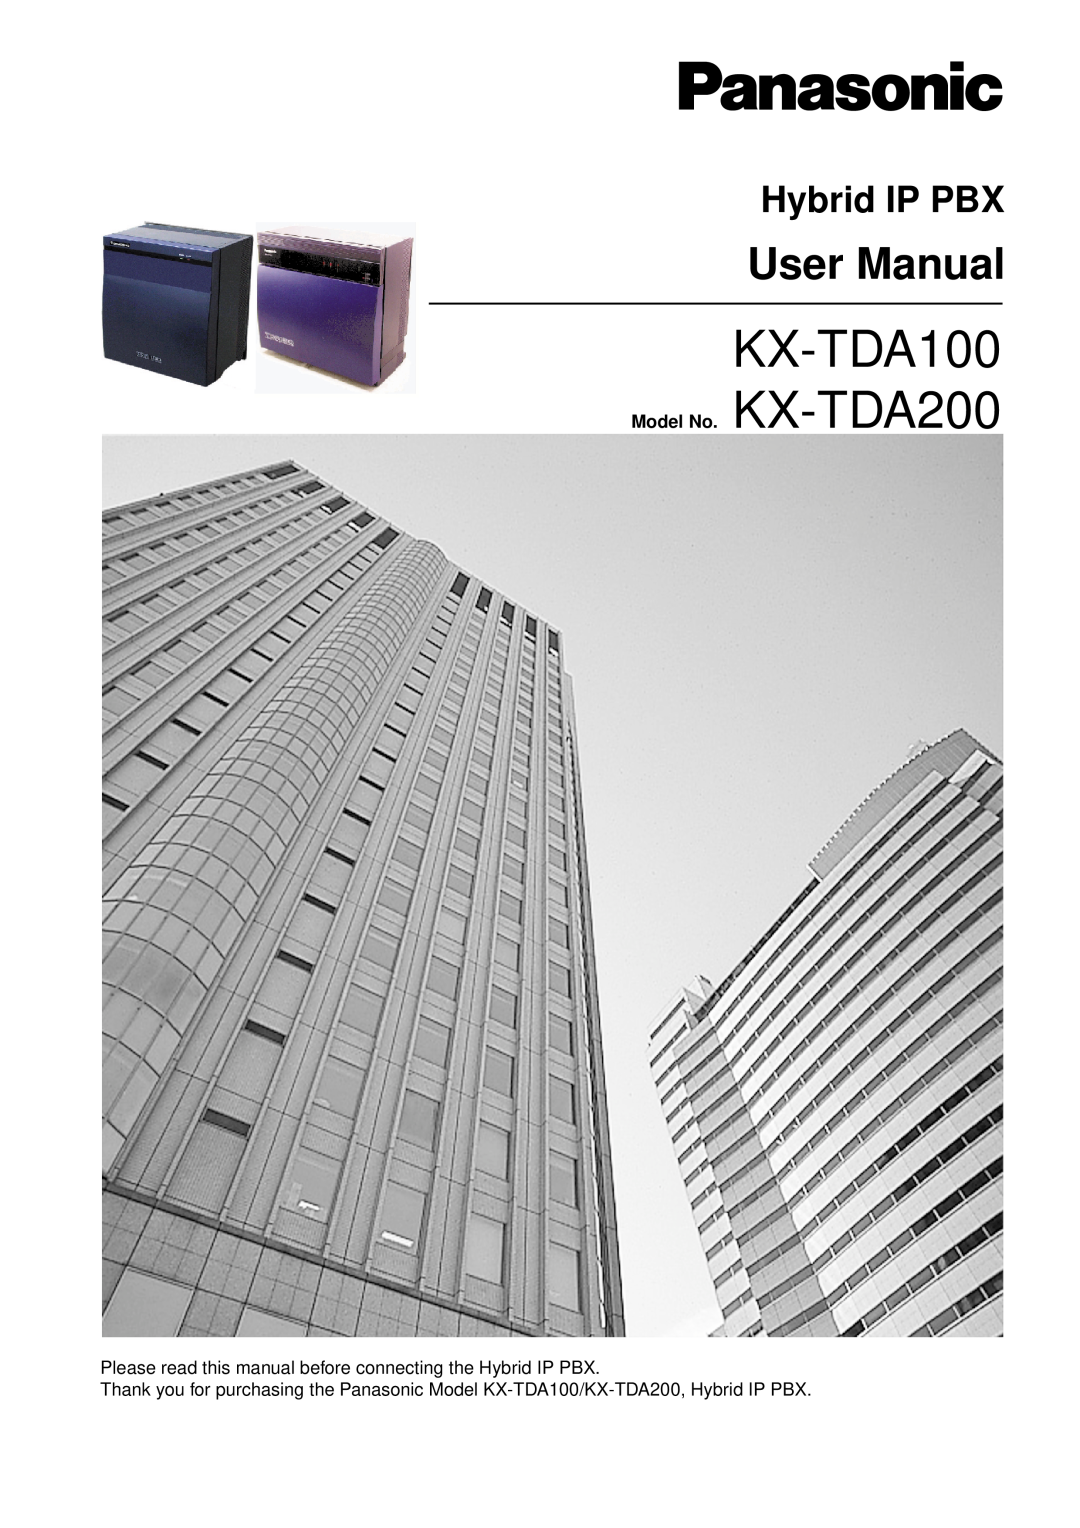 Panasonic user manual Hybrid IP PBX, KX-TDA100 Model No. KX-TDA200 